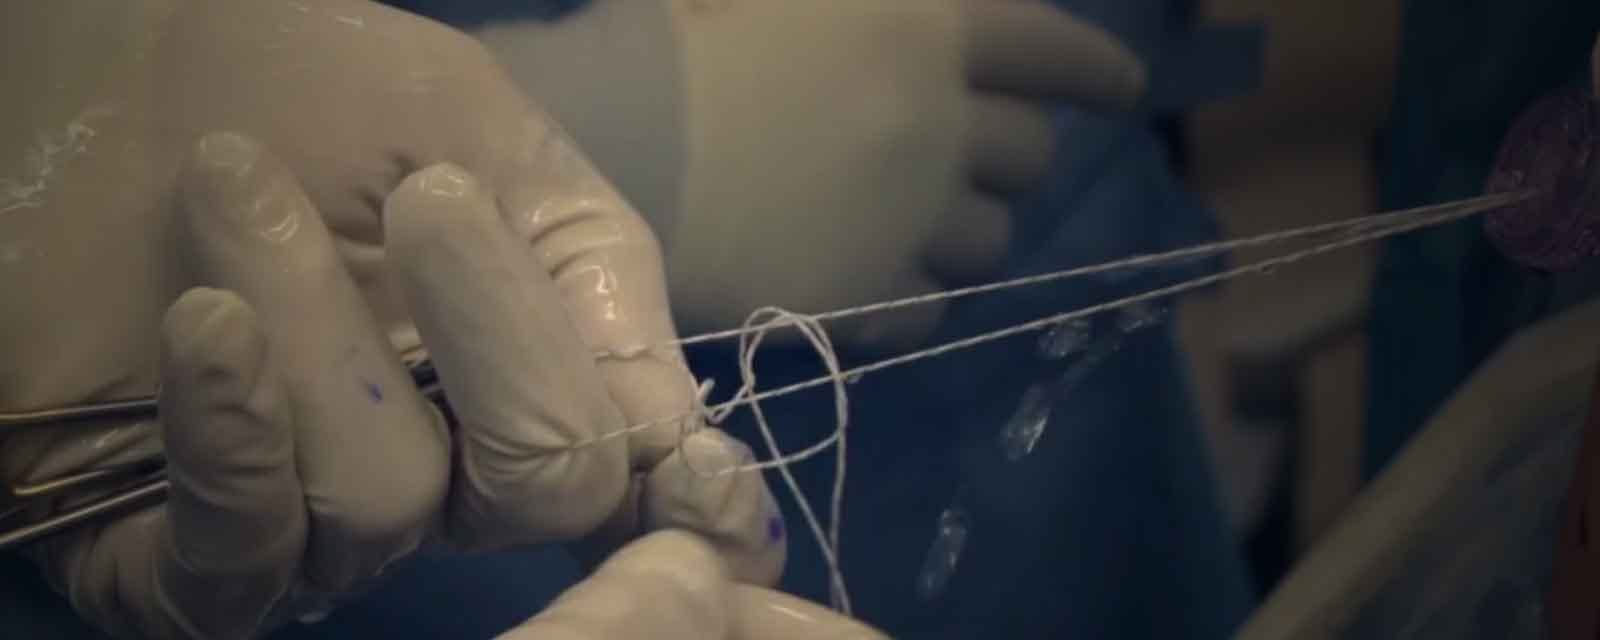 tying-arthroscopic-knot-glenoid-suture-anchor